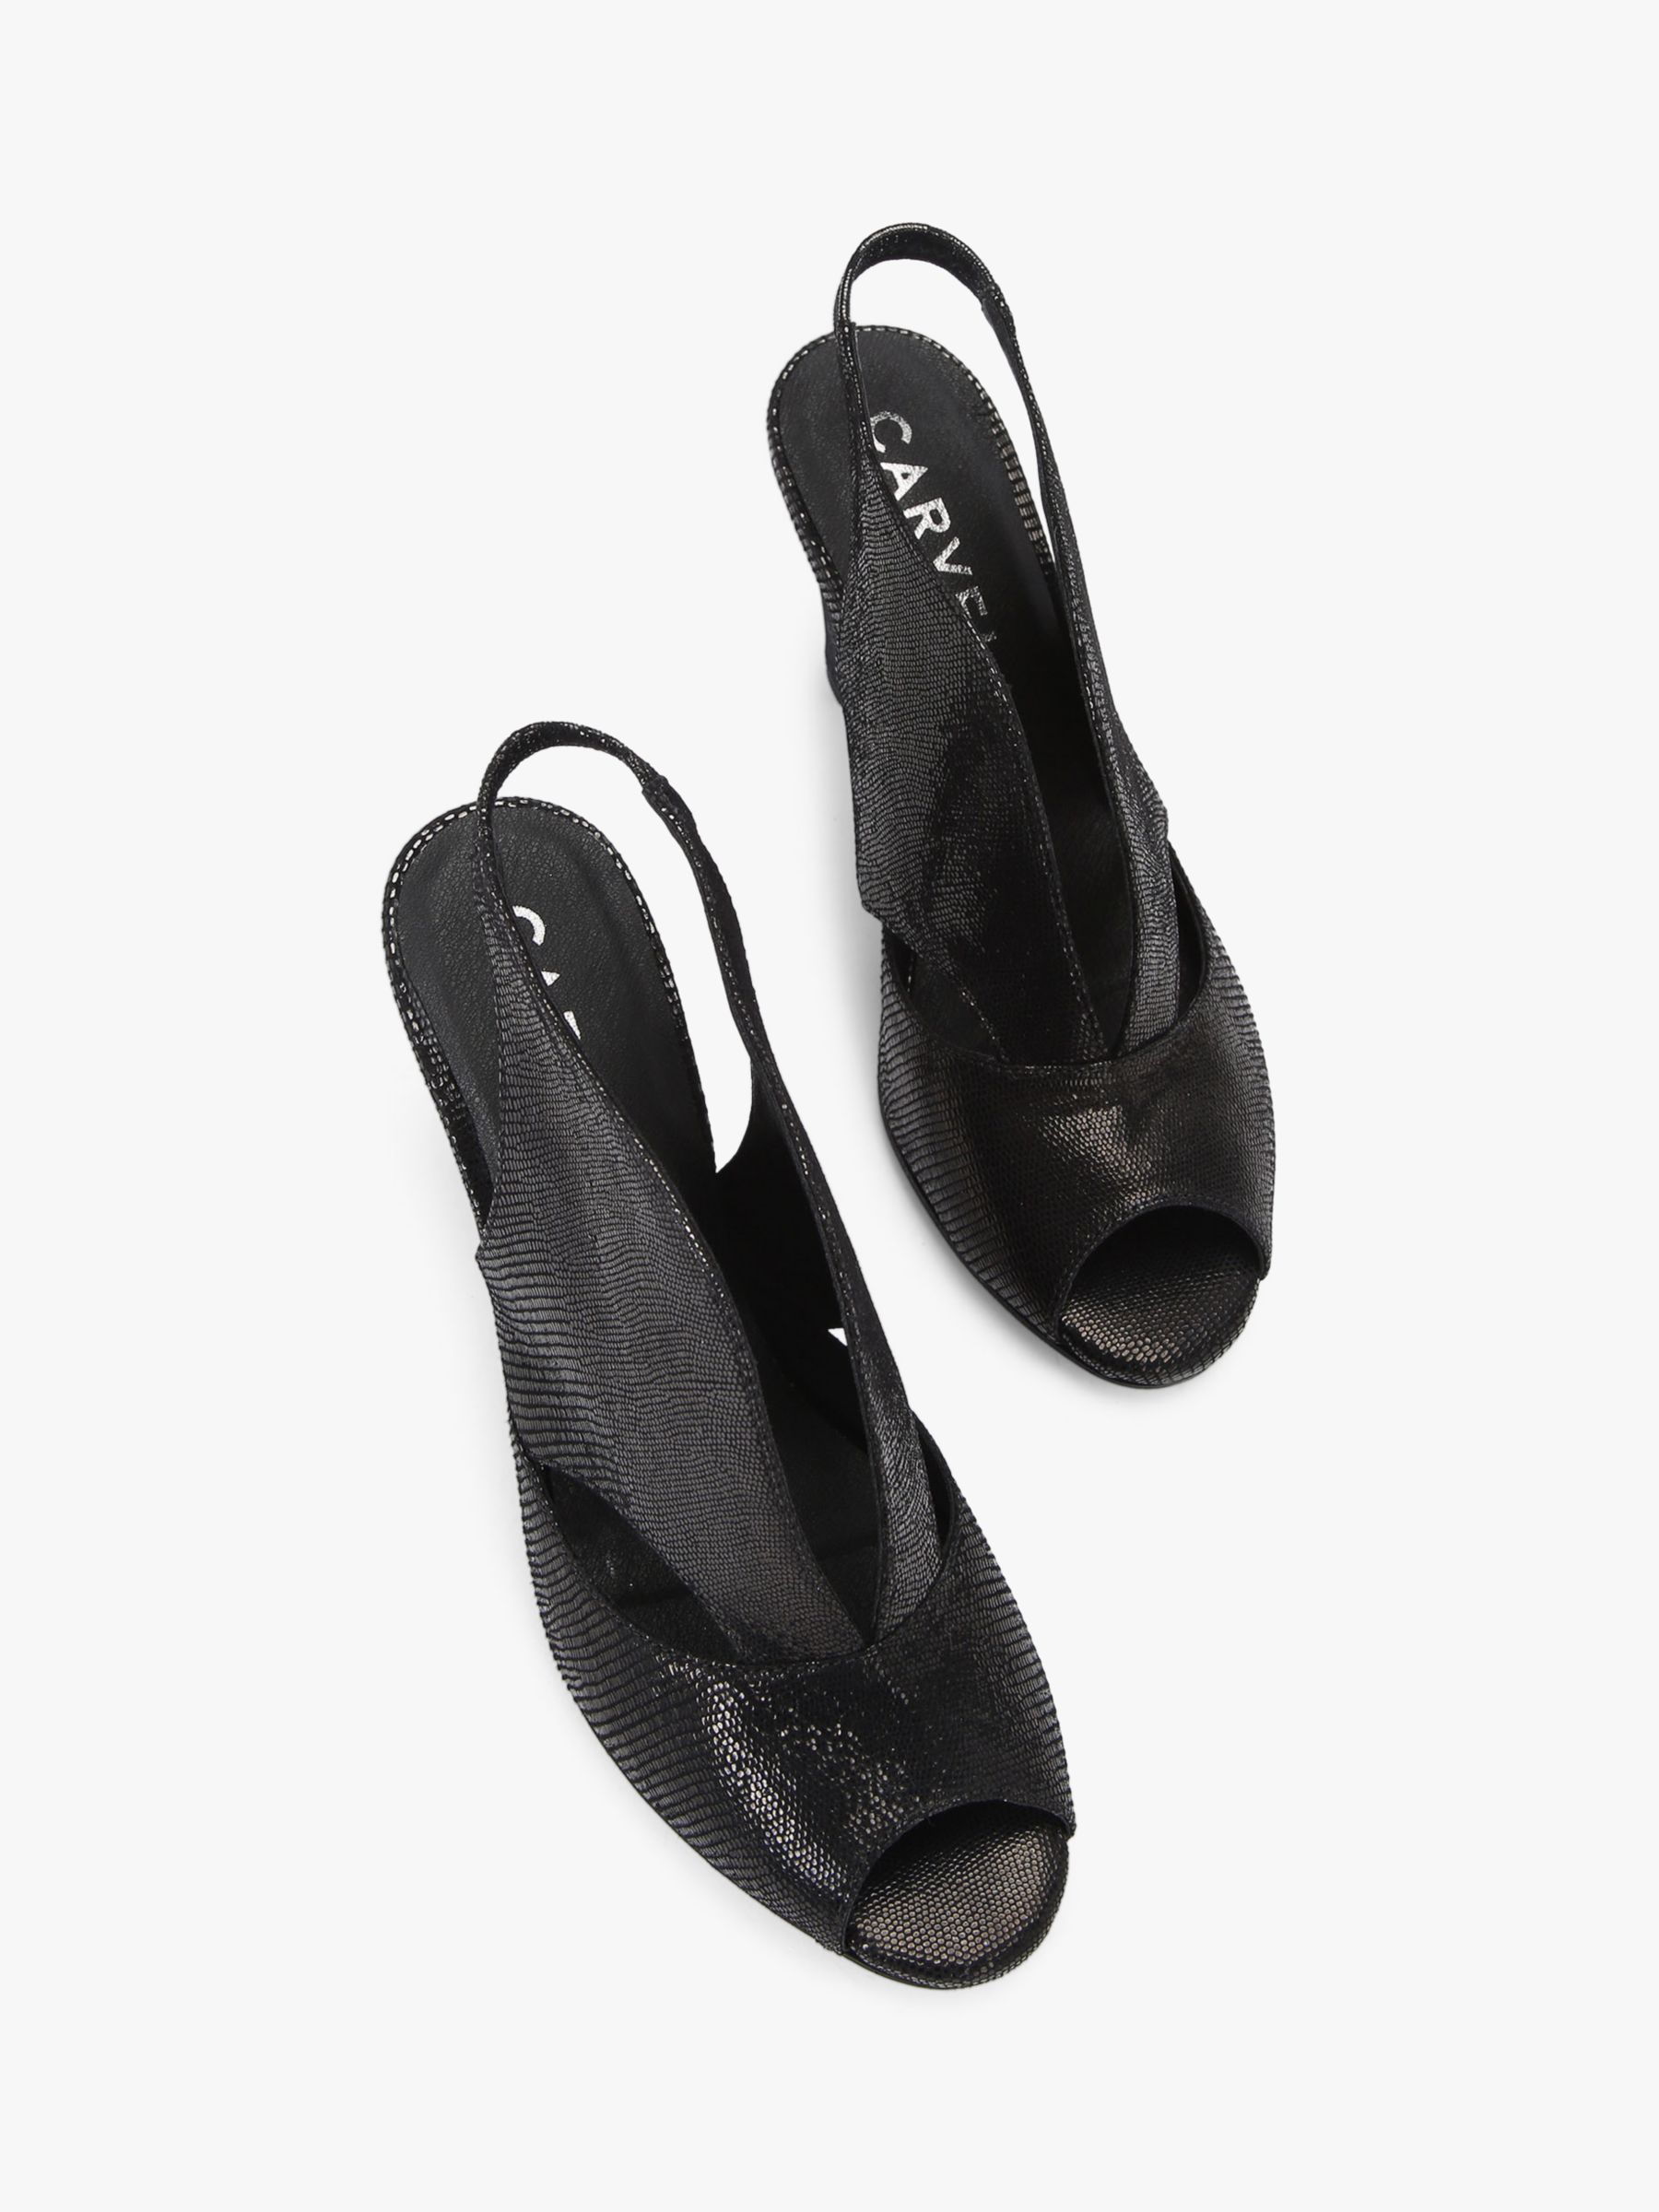 Carvela Arabella Snakeskin Effect Leather Open Toe Court Shoes, Black ...